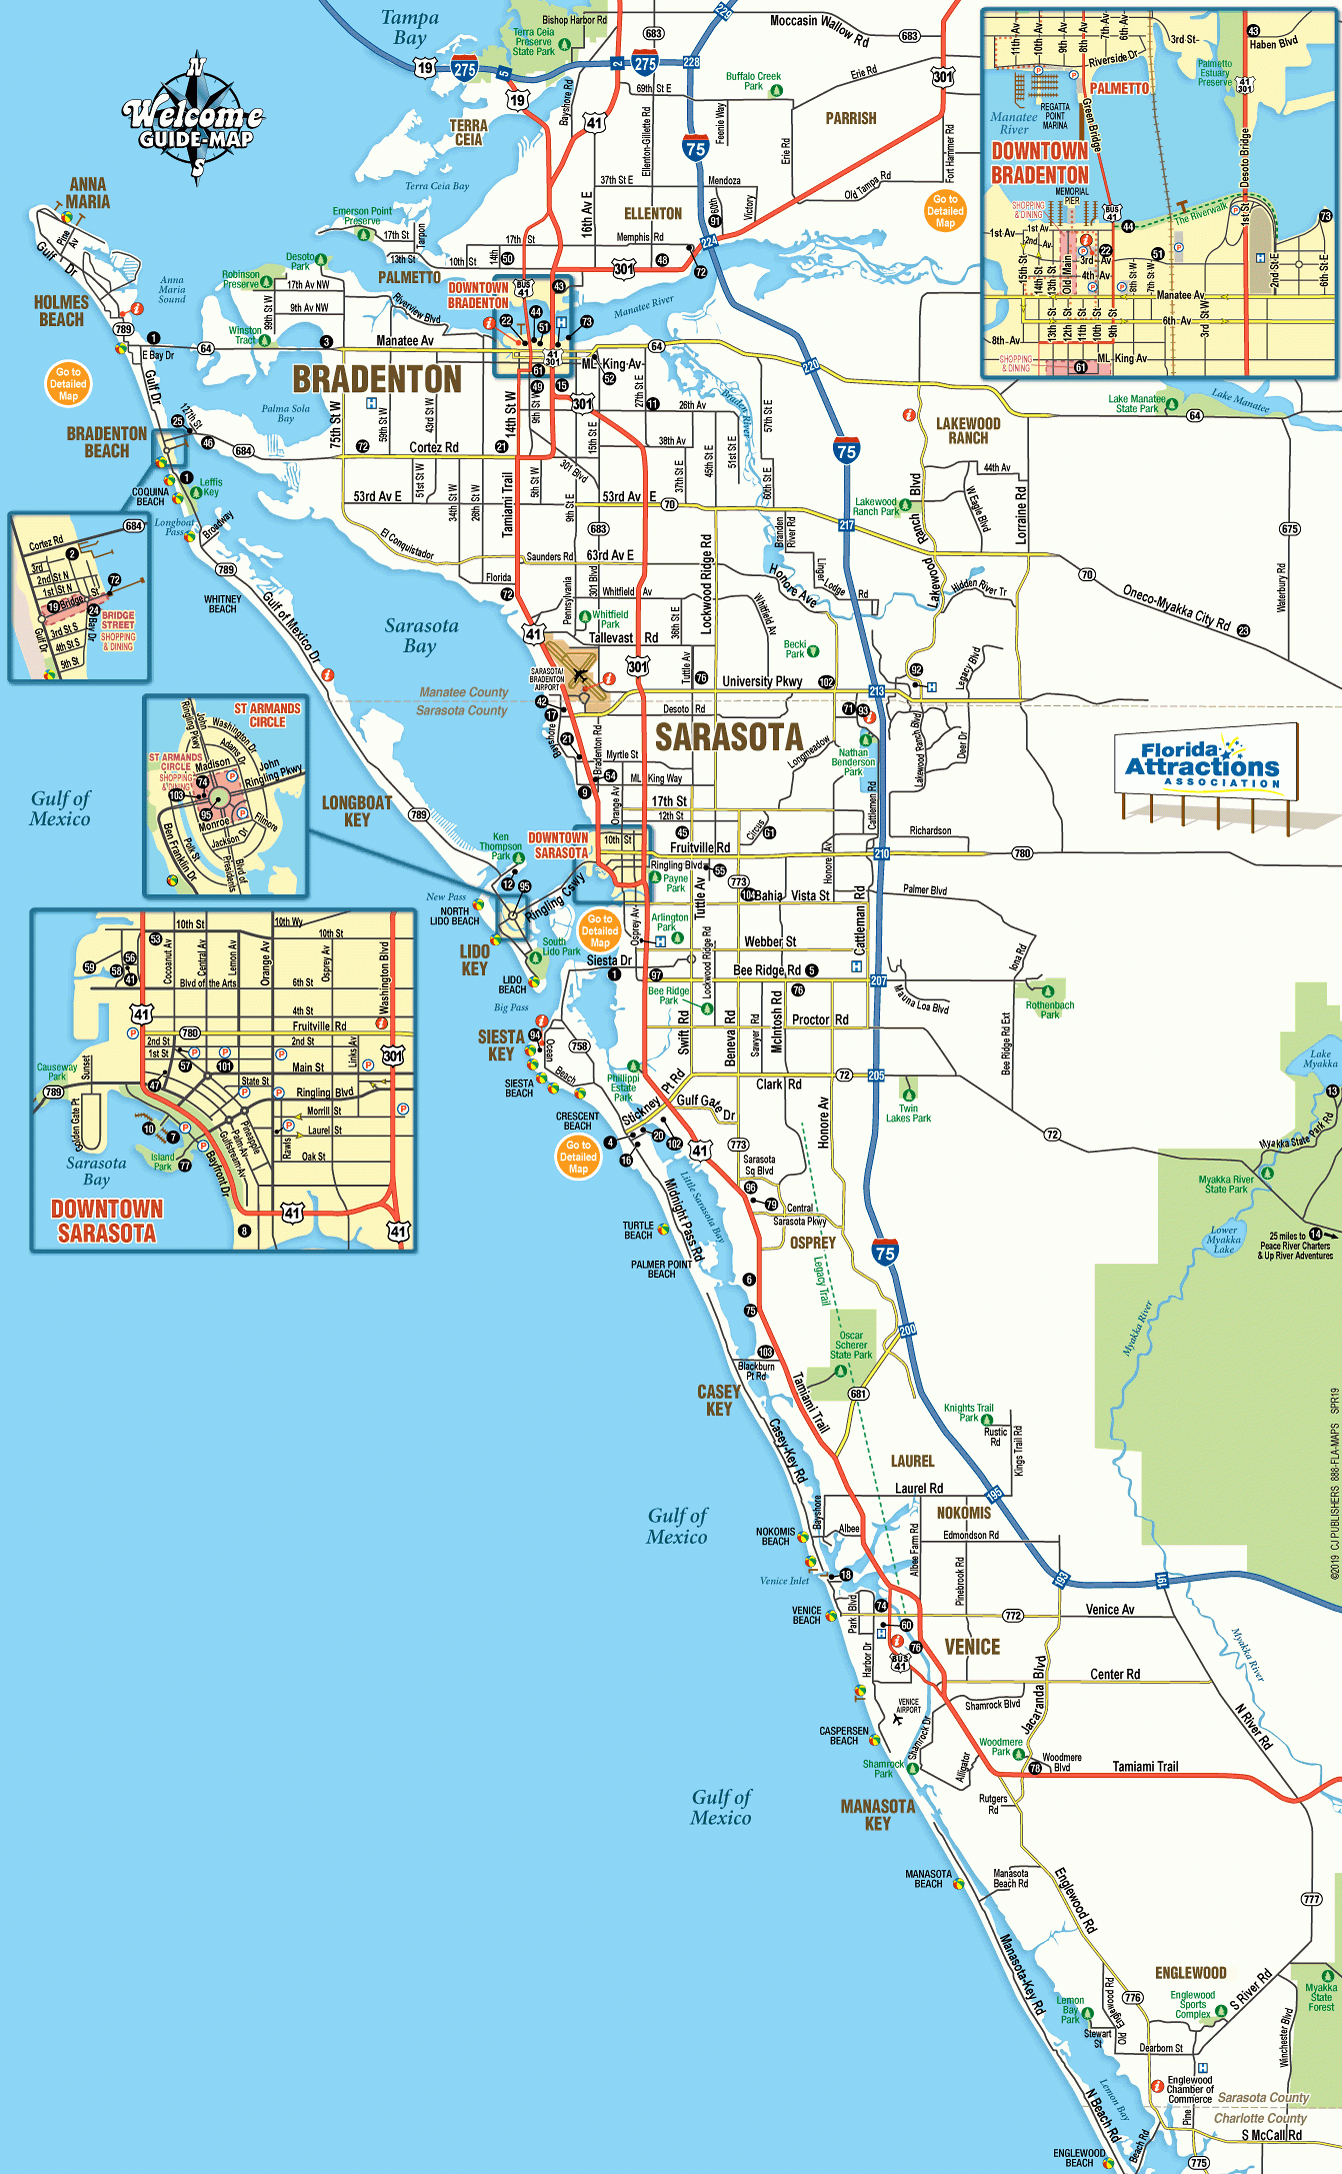 Map Of Sarasota And Bradenton Florida - Welcome Guide-Map To - Florida Lakes Map